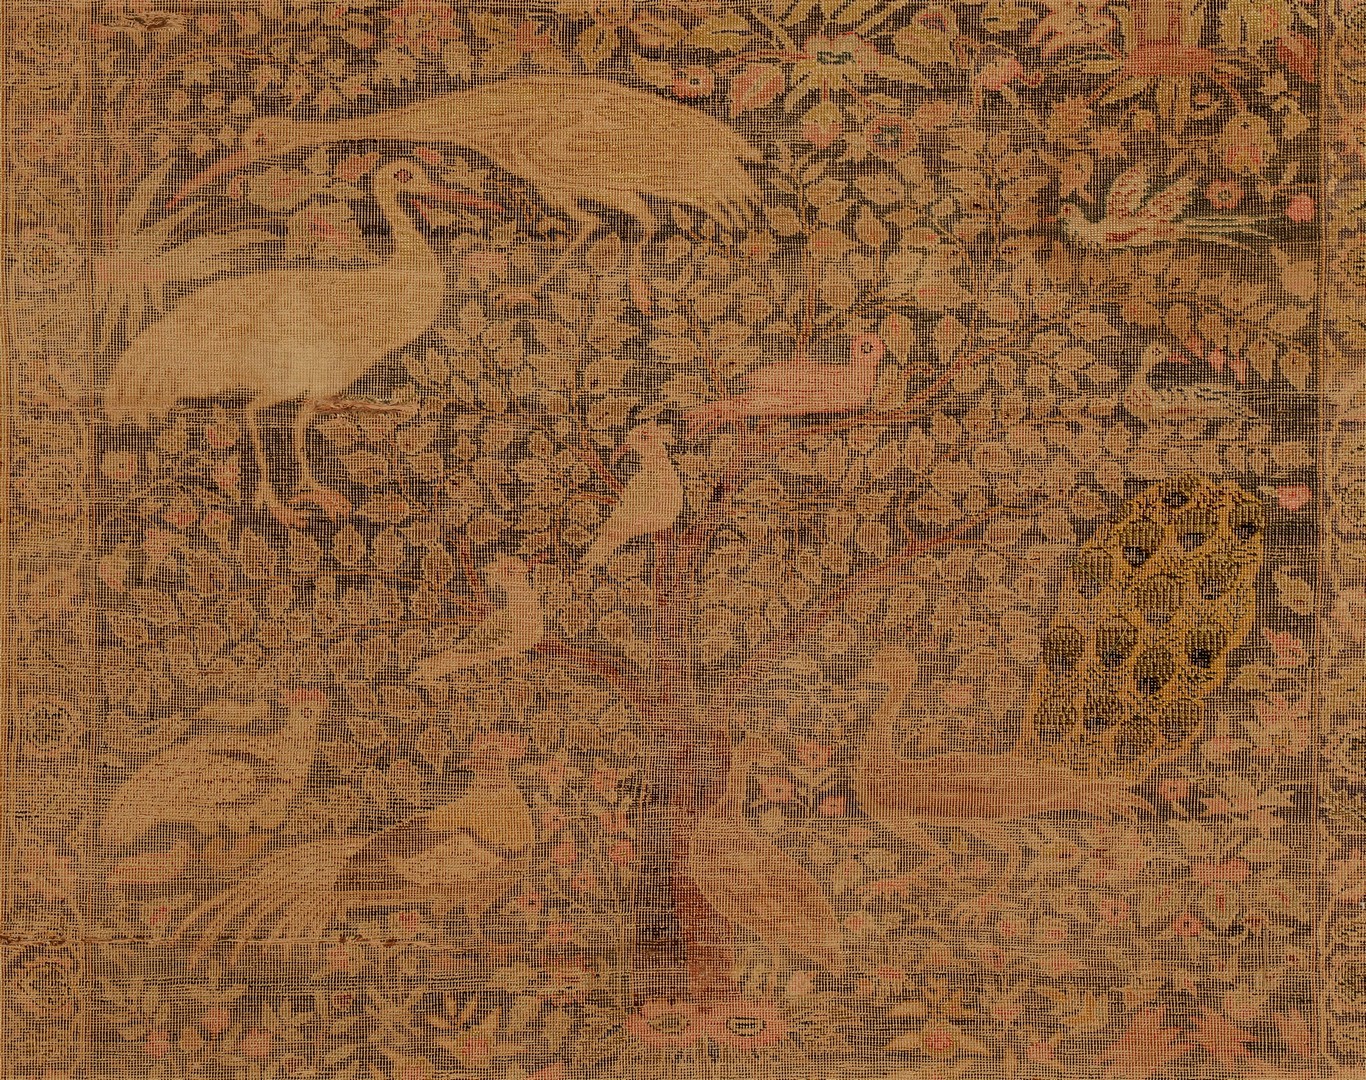 Lot 840: Persian Silk Qum Rug, display mounting